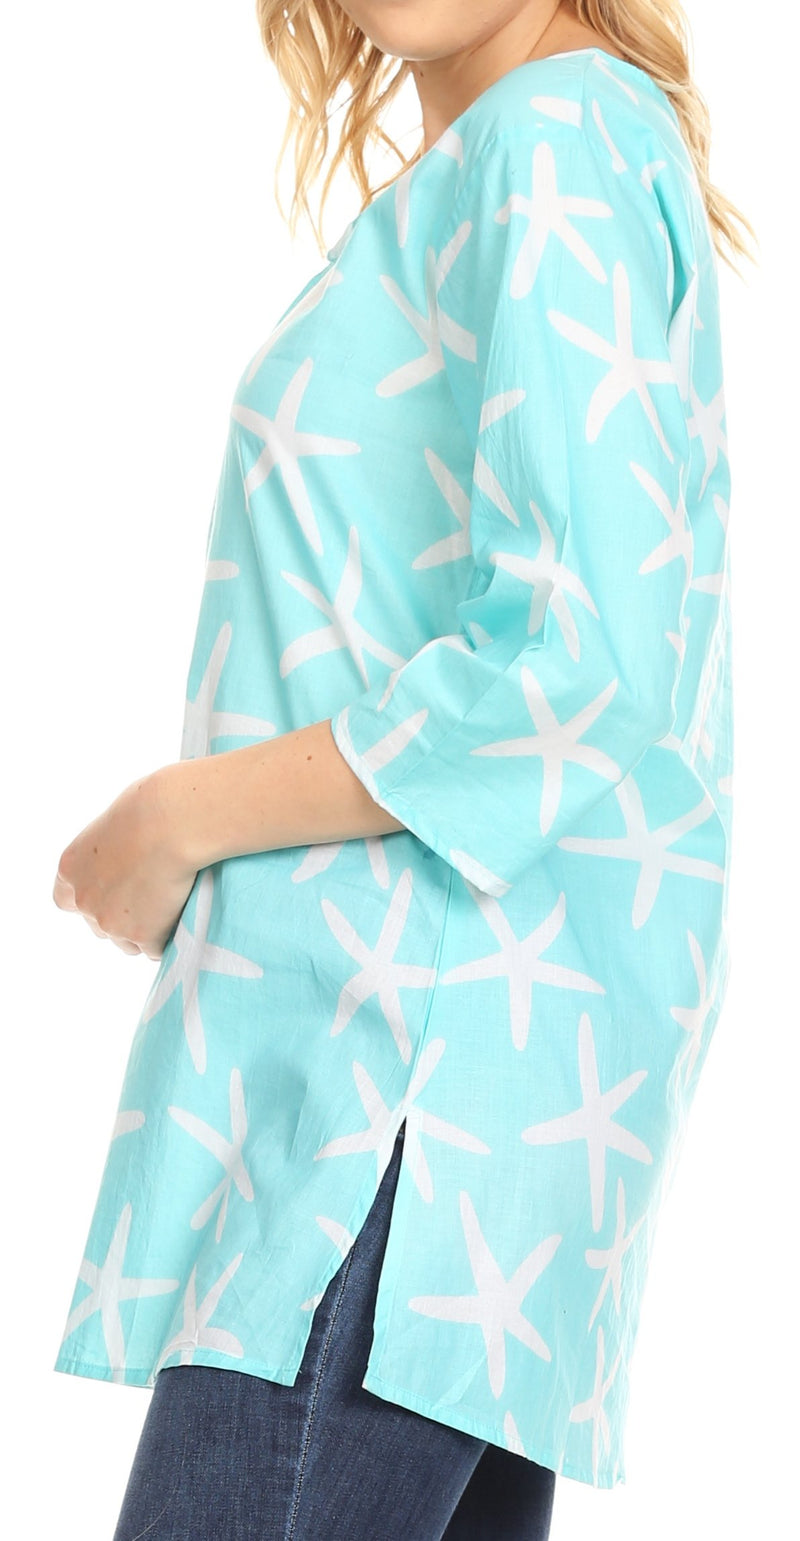 Sakkas Nila Women's Casual Summer Light 3/4 Sleeve Printed Tunic Top Cover-up